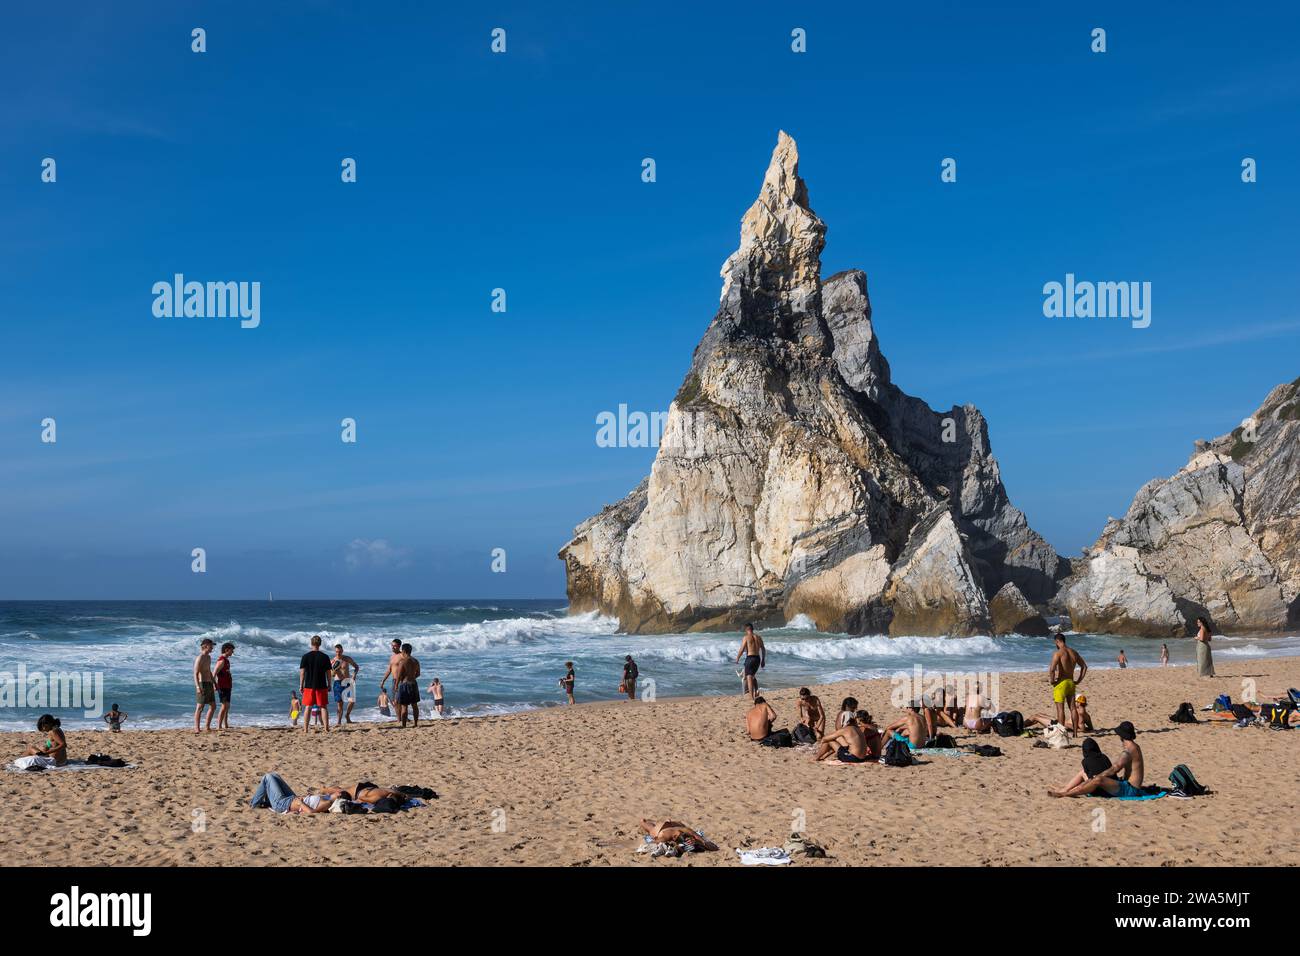 Praia da Ursa, Portugal - October 14, 2023 - People sunbath at remote Ursa Beach by the Atlantic Ocean with striking coastal rock formations. Stock Photo